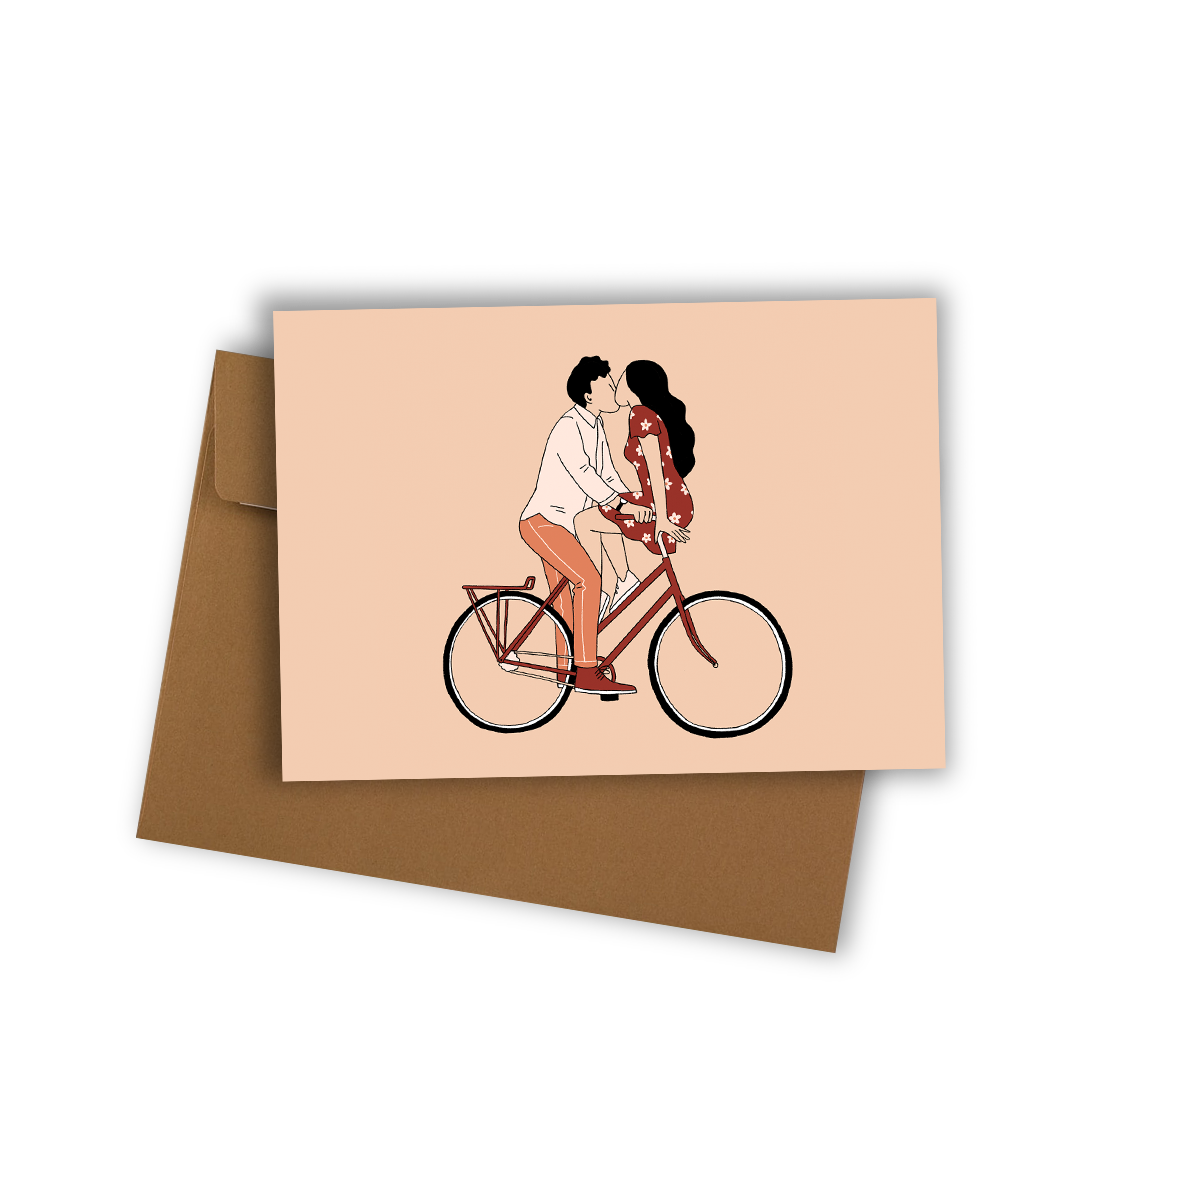 Carte . Lovers on bike